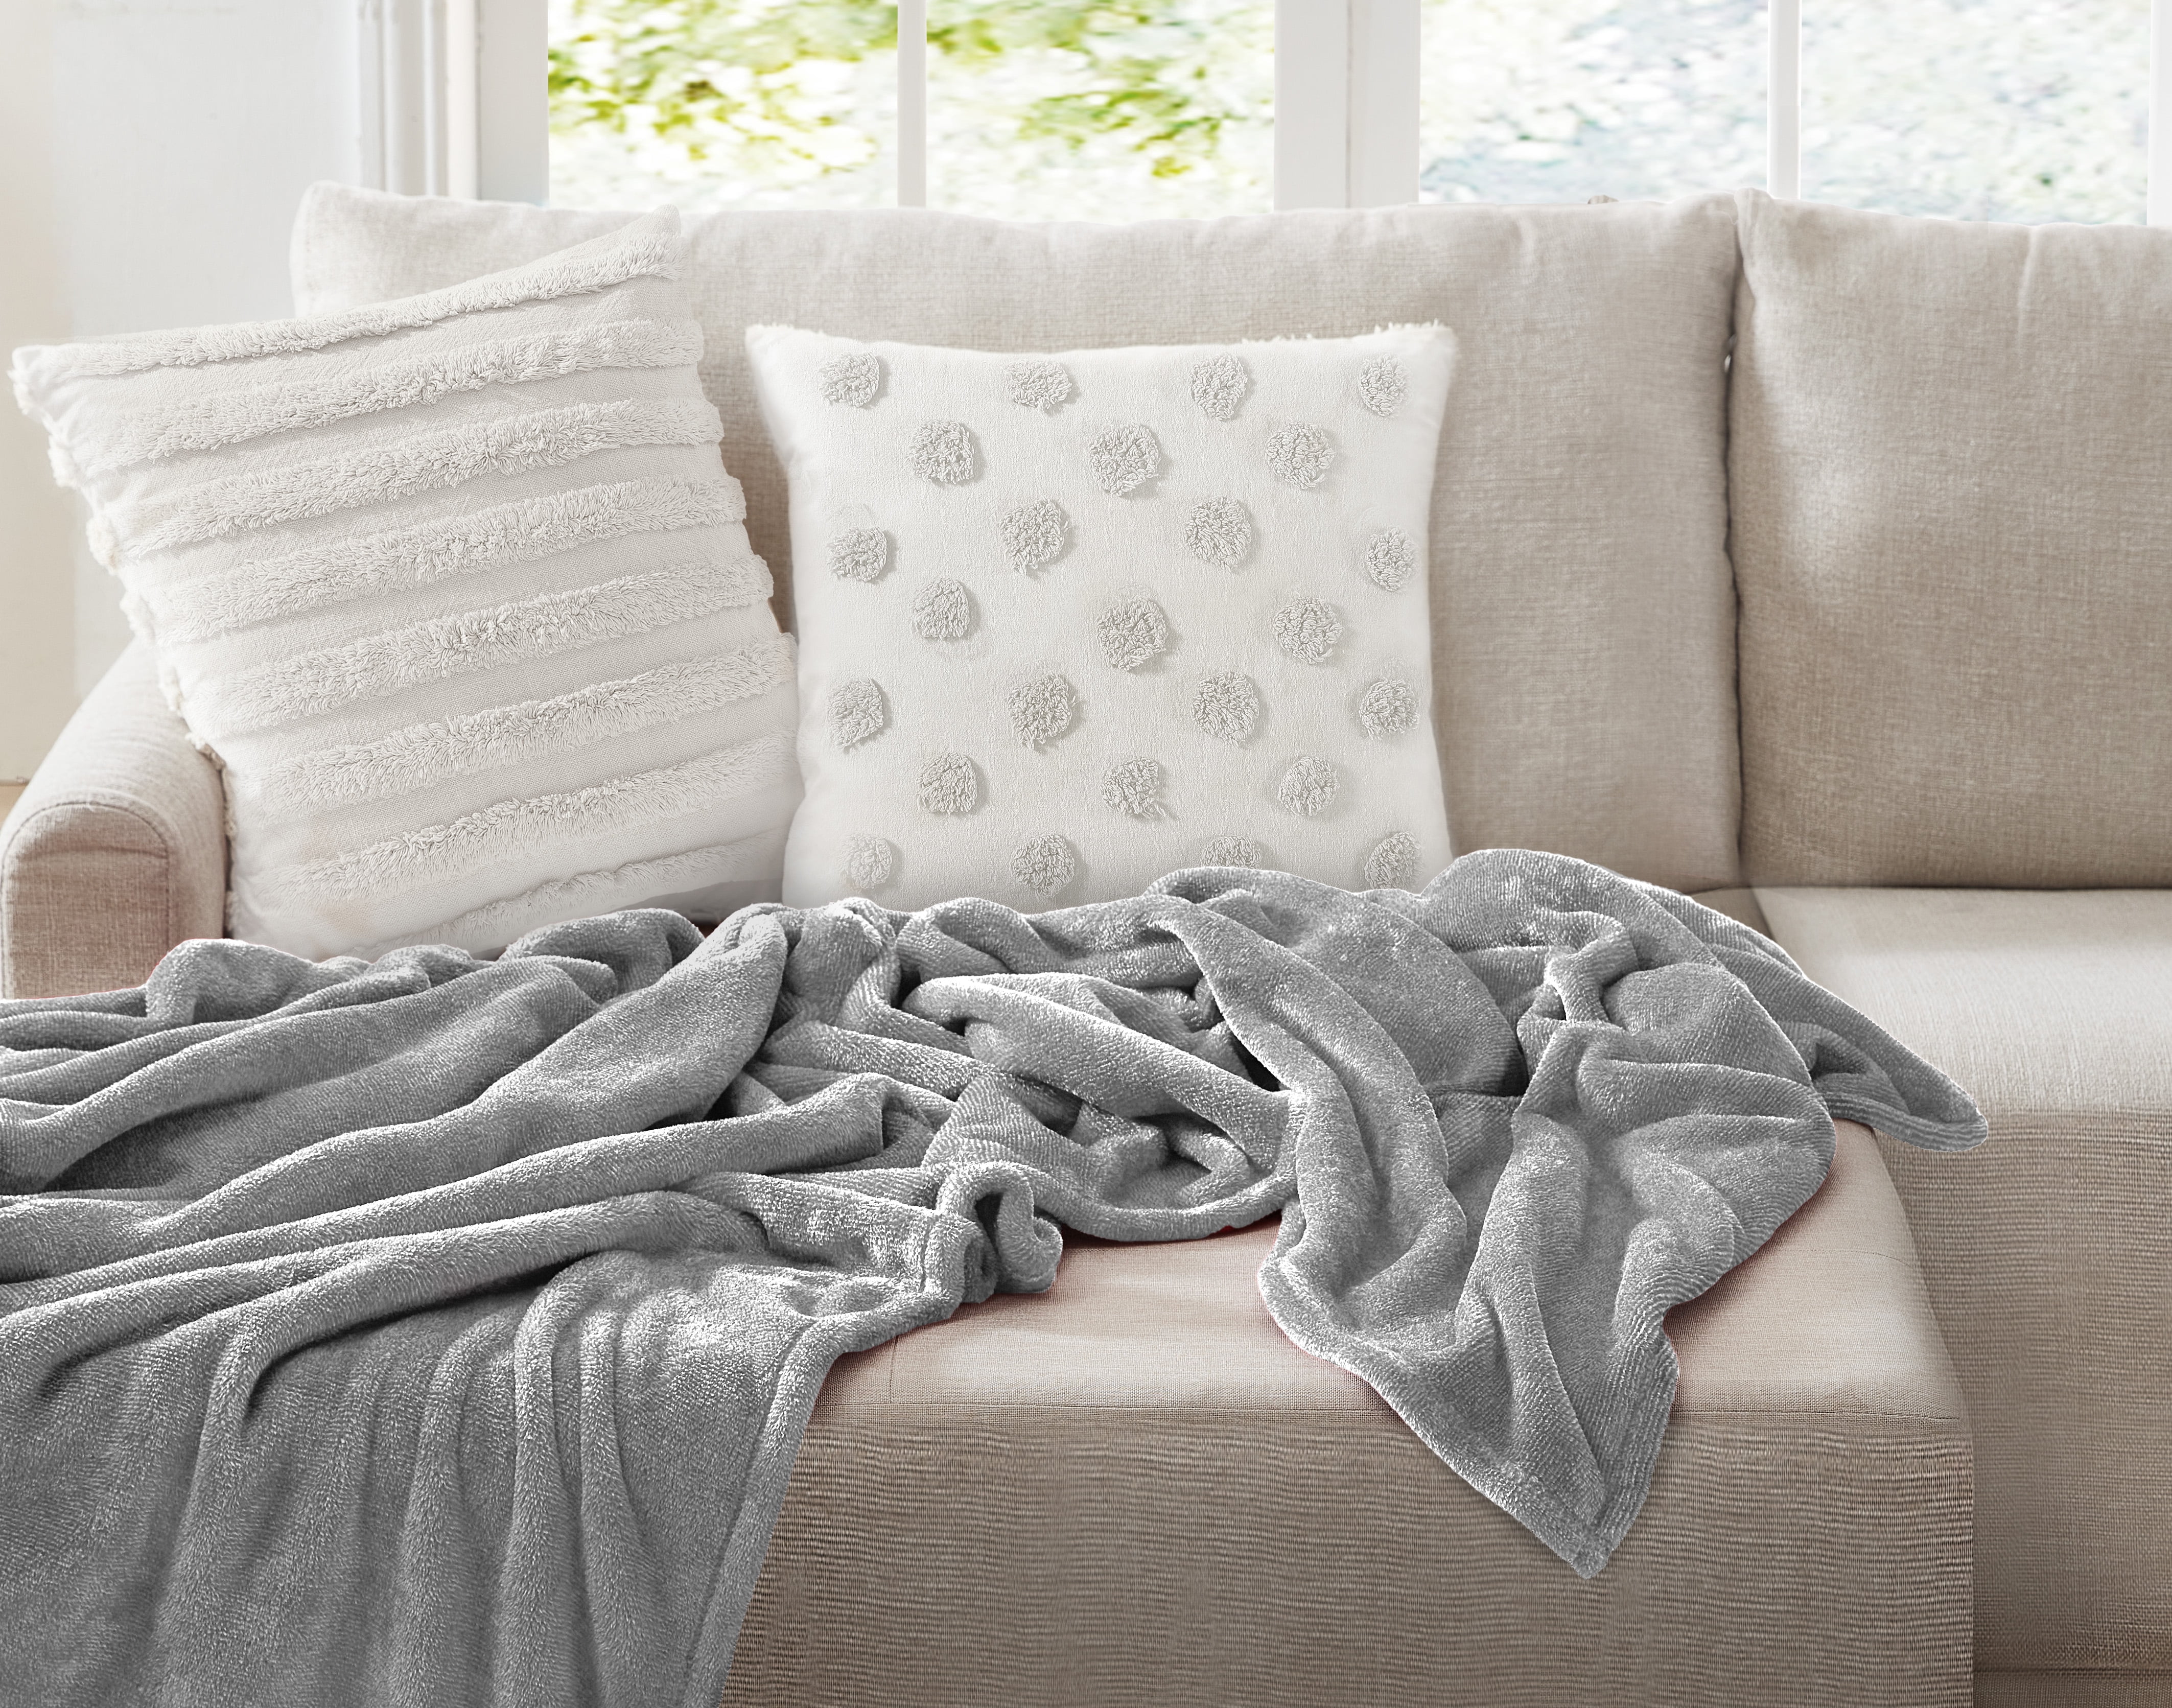 Mainstays Solid Plush Blanket, Grey, Full/Queen